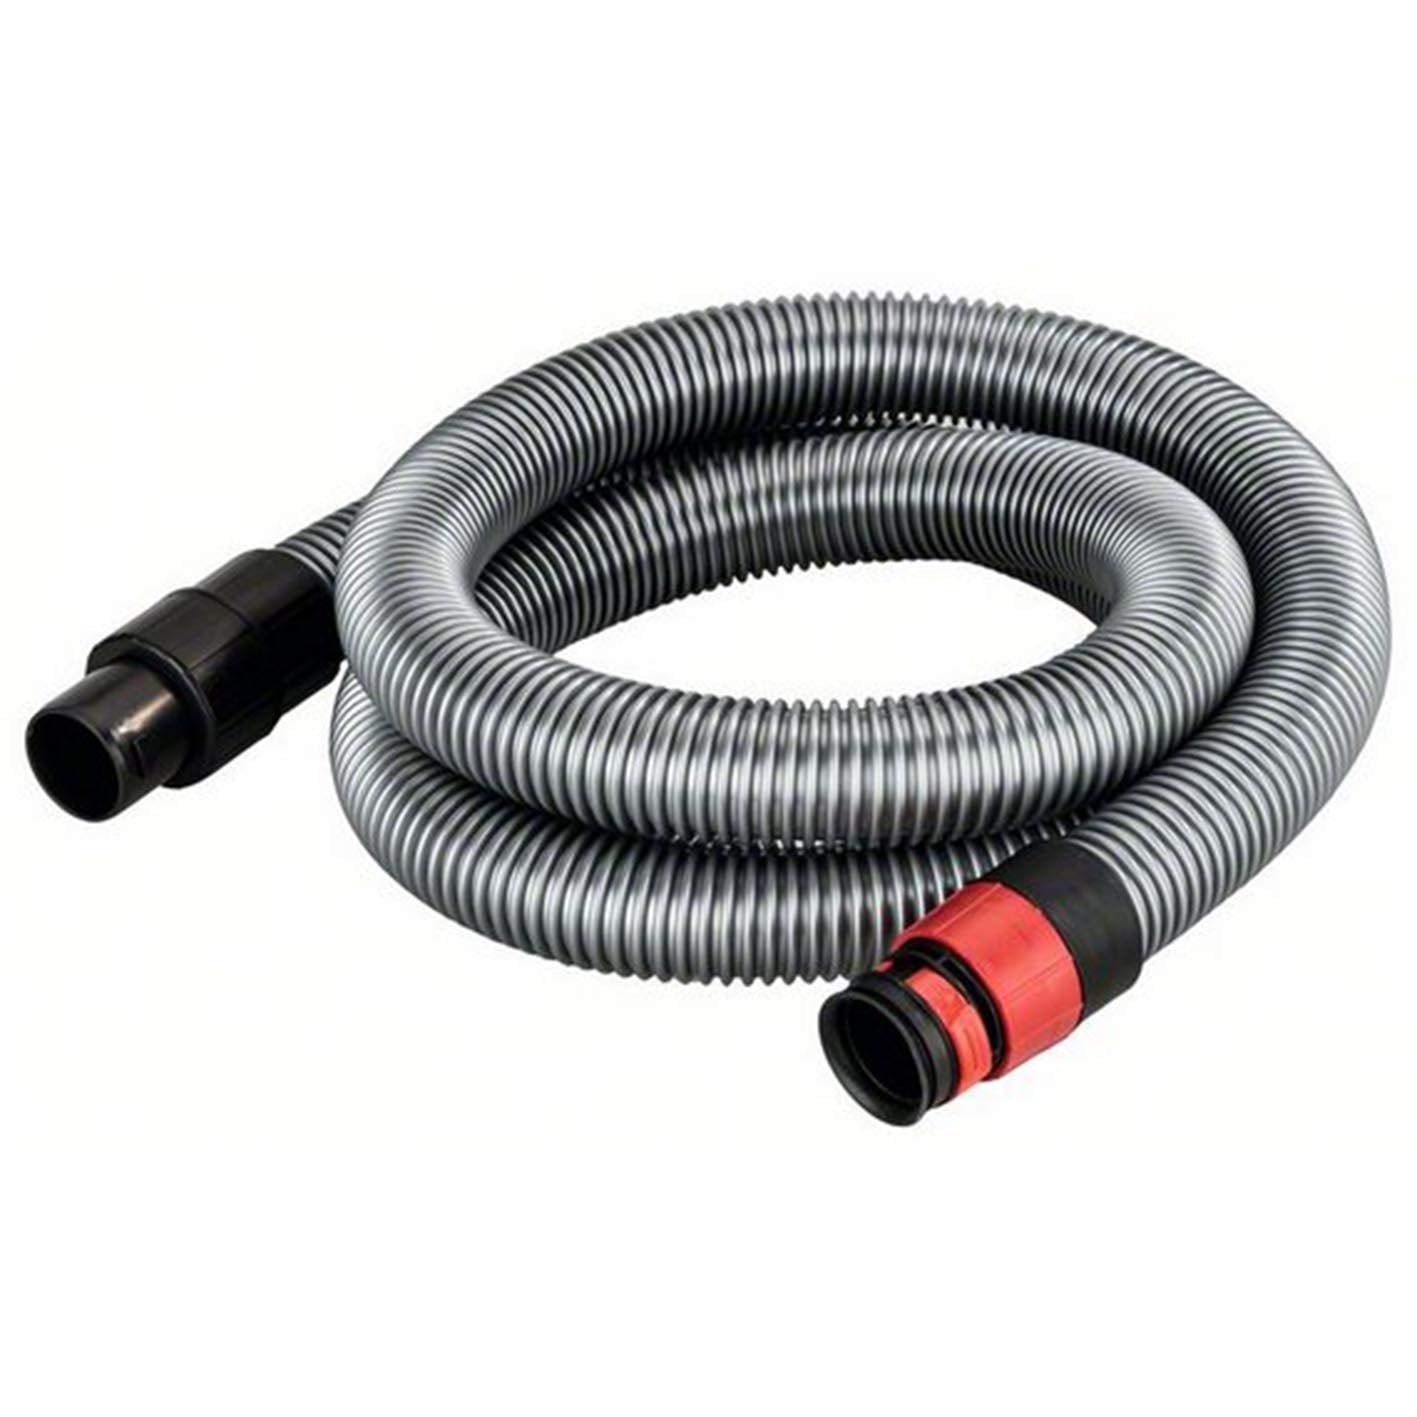 Bosch Anti-static, flexible AdvancedVac 20 hose, 2.2m 2609256F30 Power Tool Services